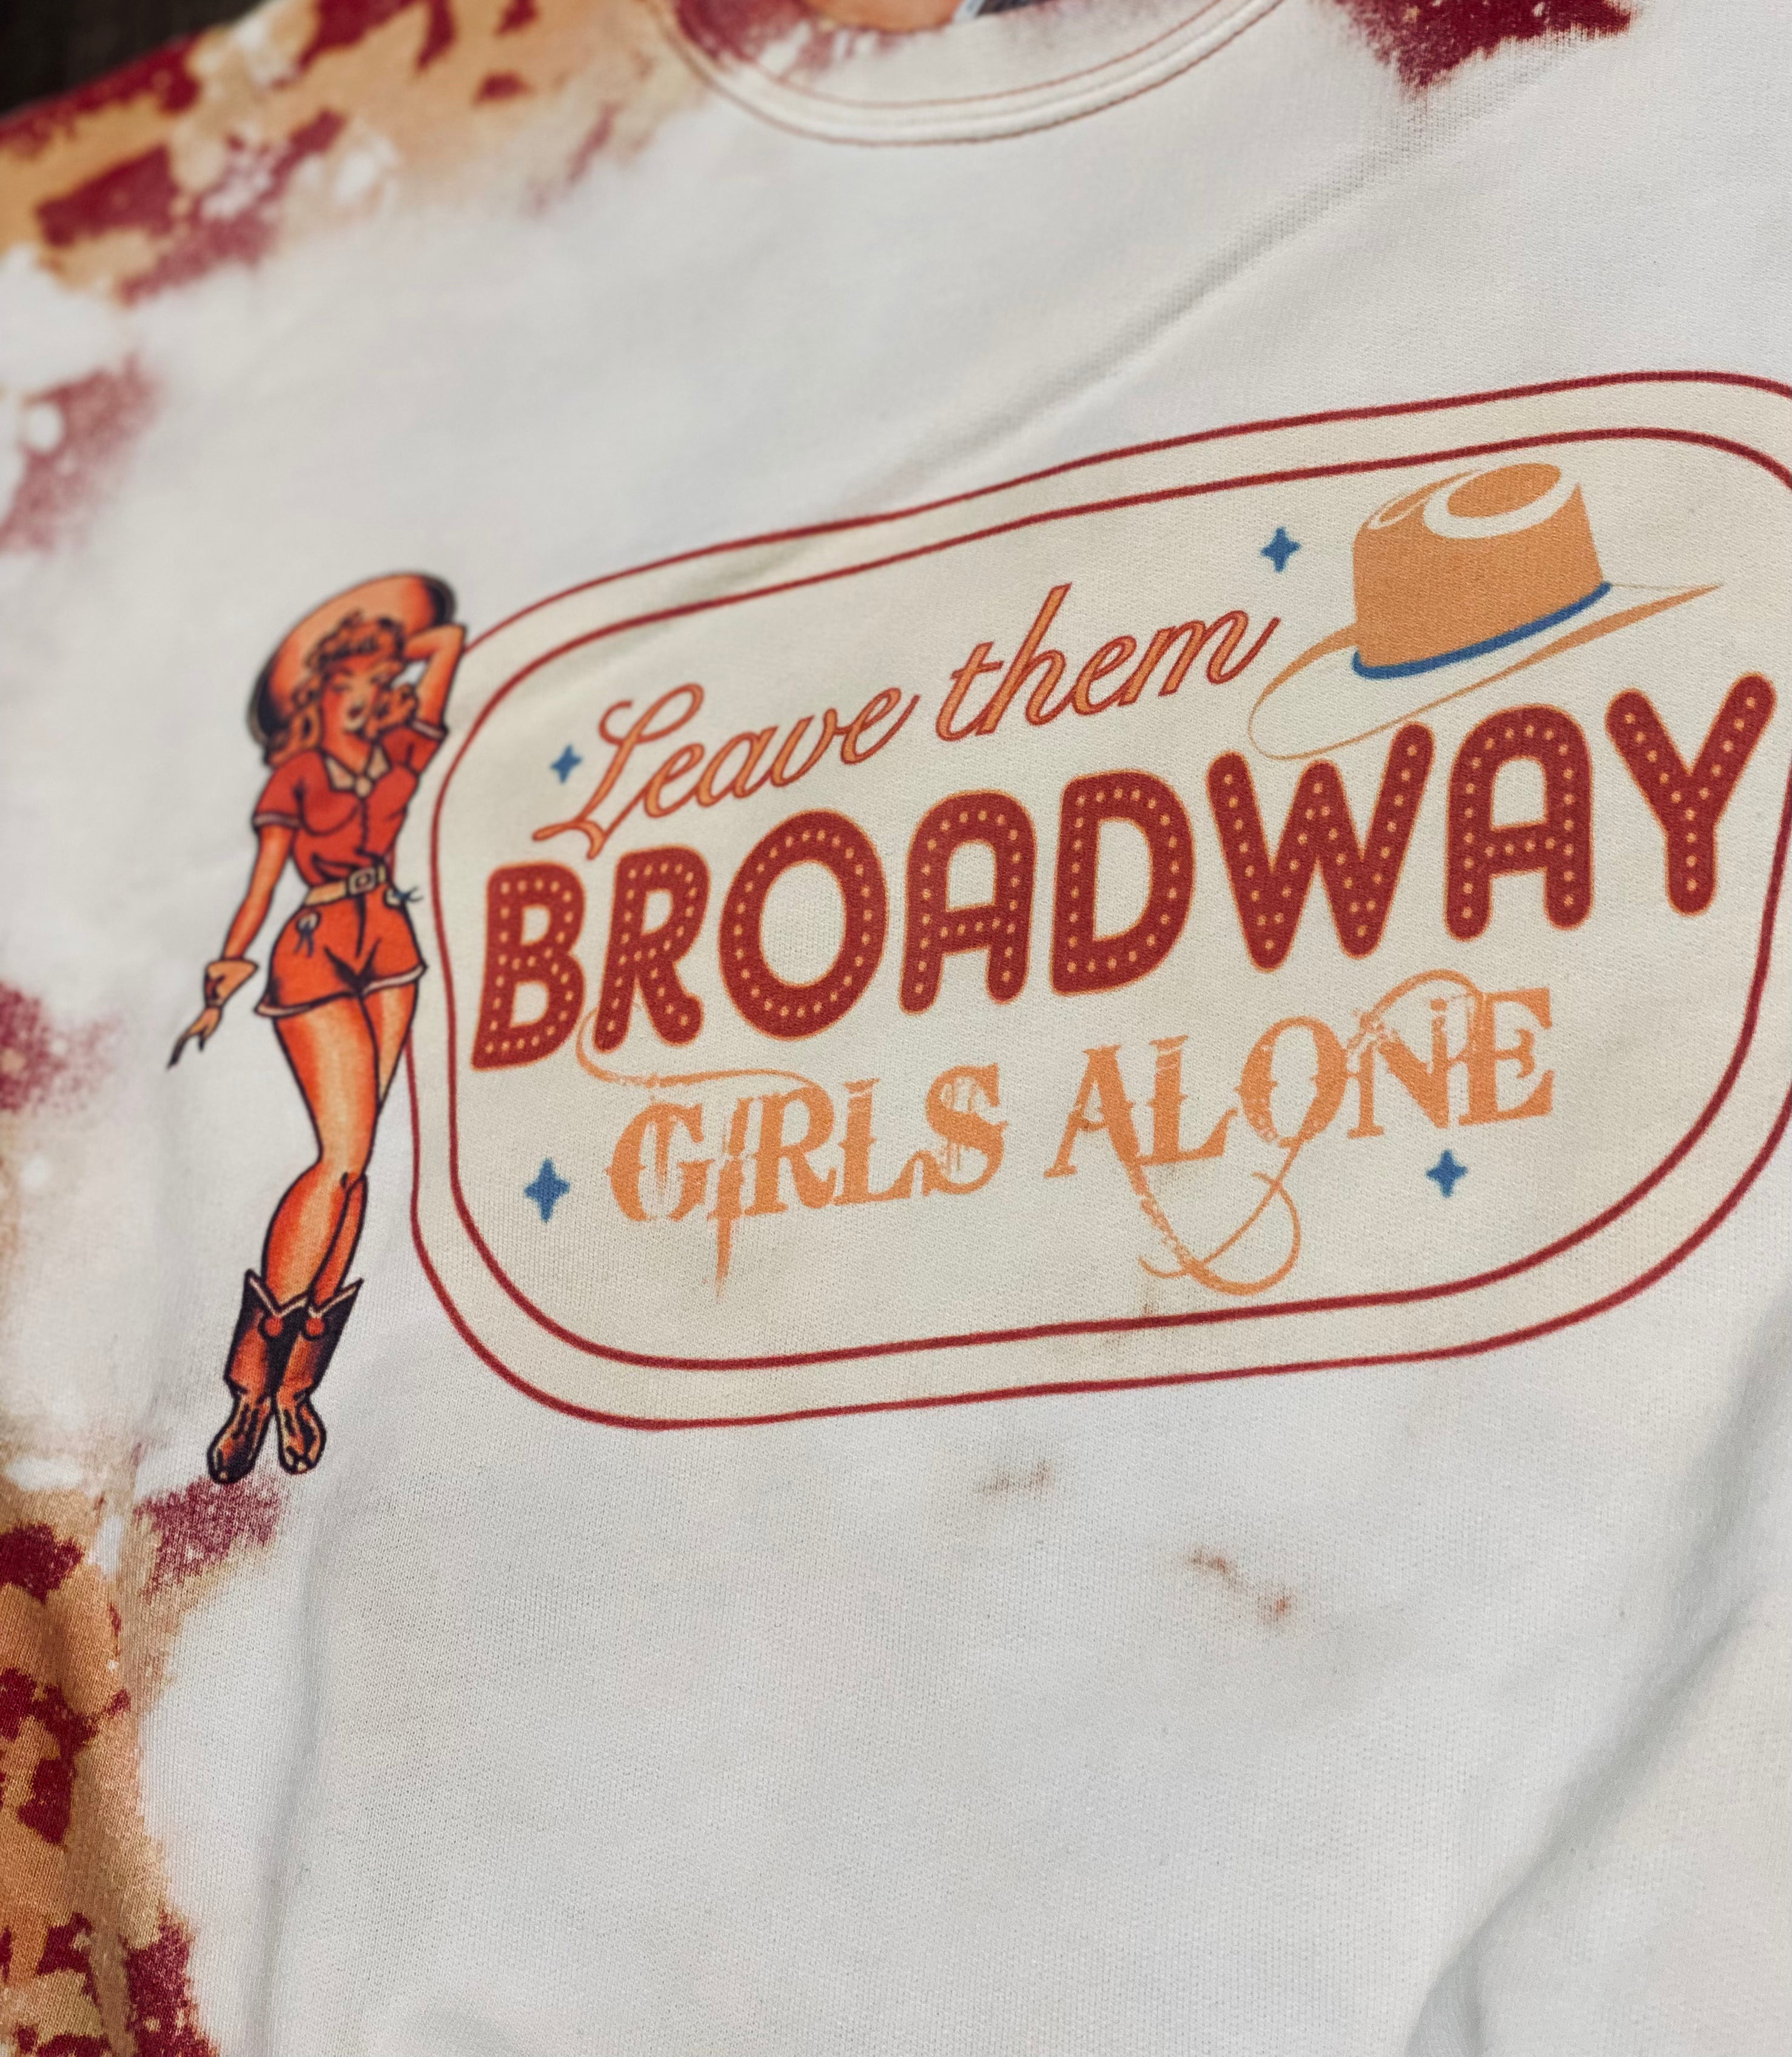 Leave Them Broadway Girls Alone Bleached Sweatshirt